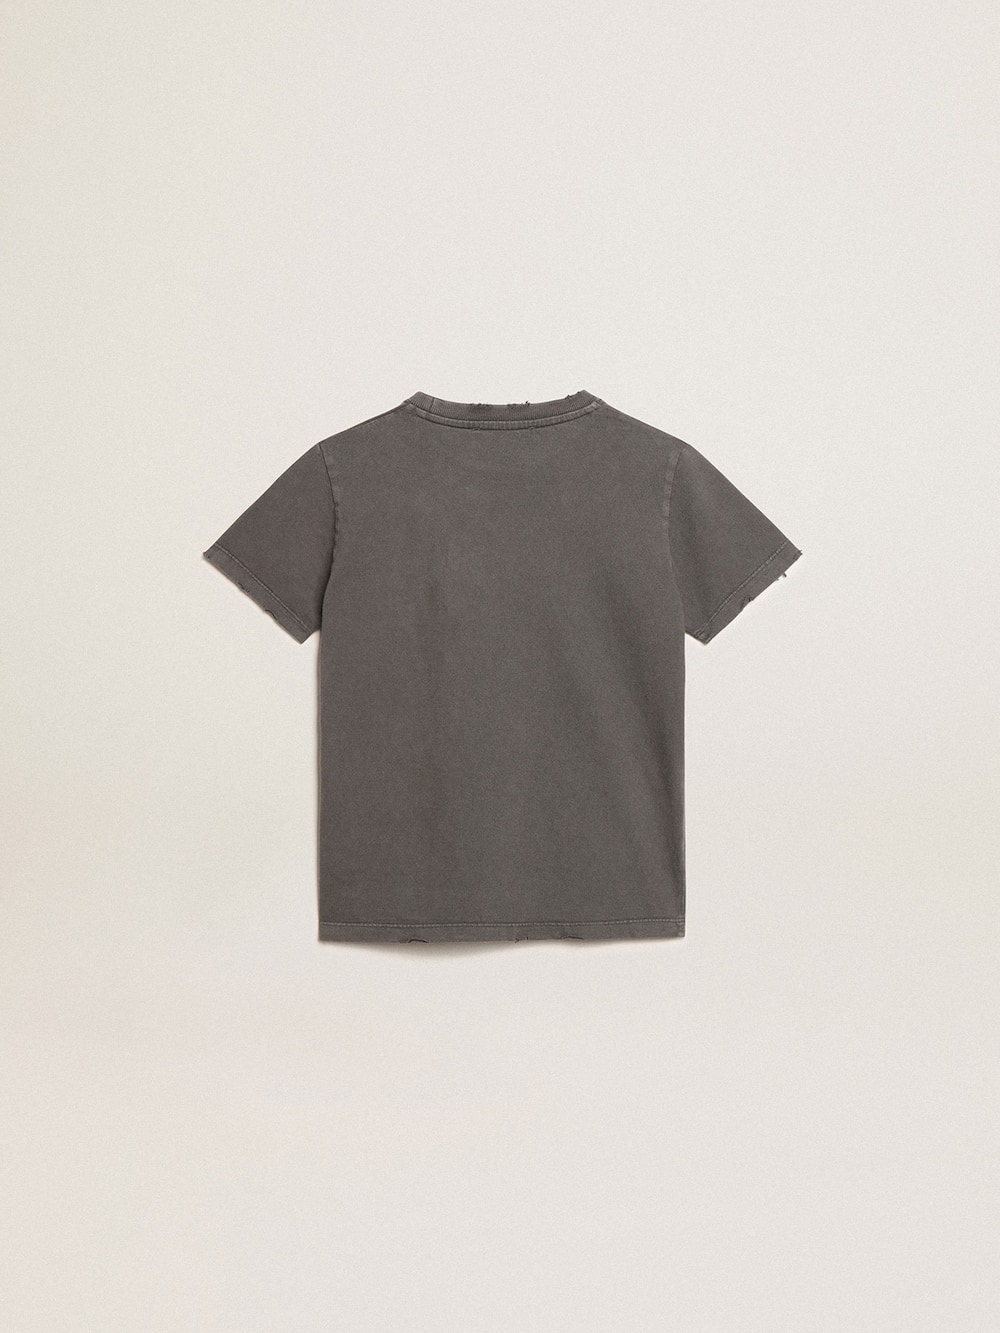 Golden Goose - Camiseta cinza infantil masculina com tratamento desgastado in 